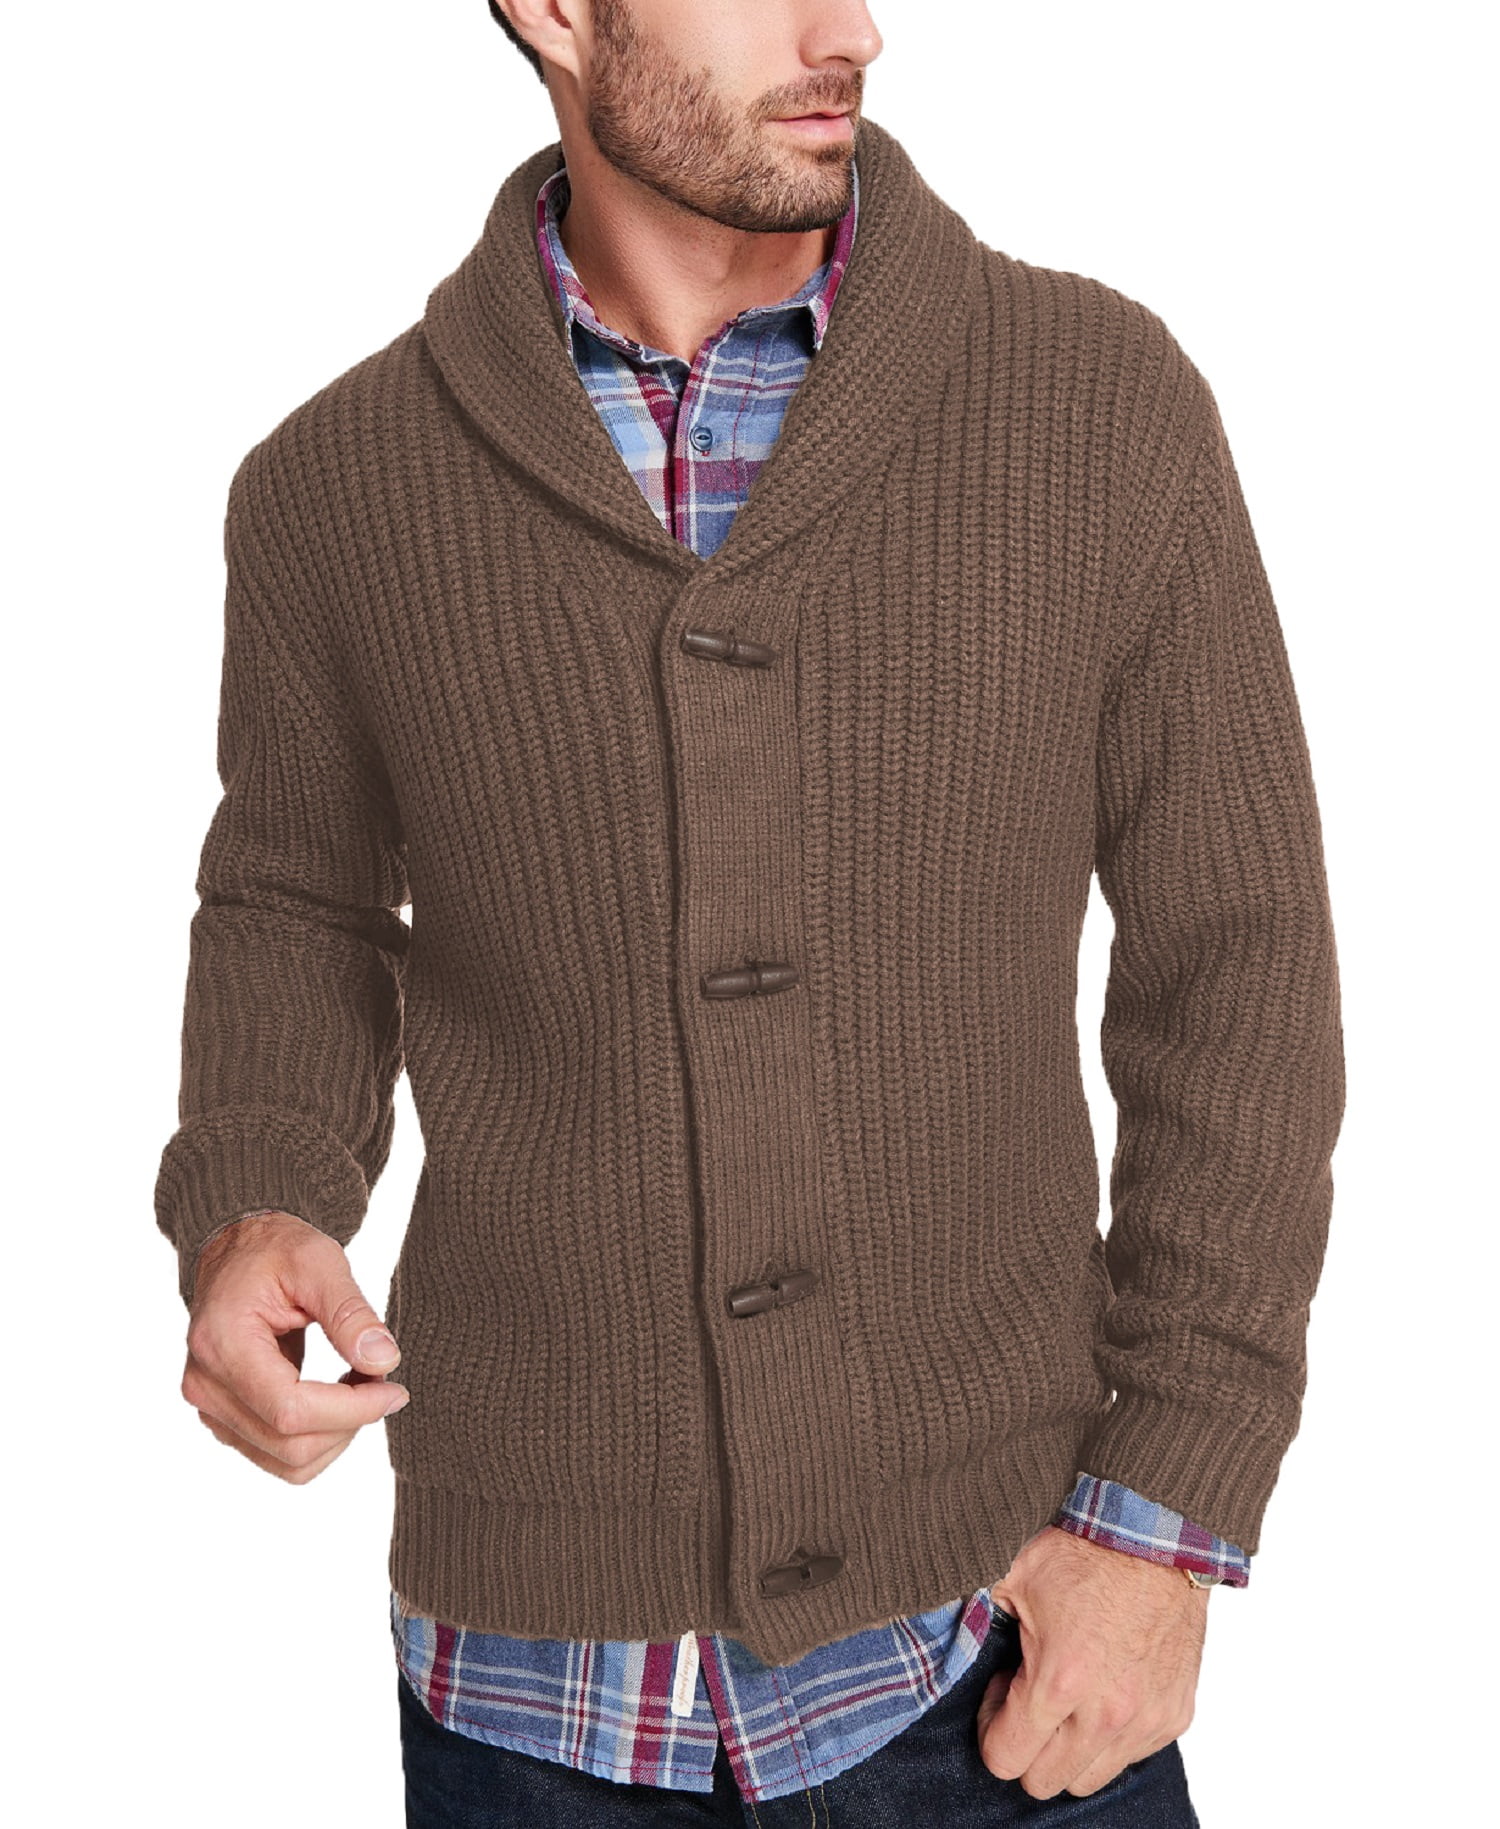 Basic Sweaters for Men – Telegraph